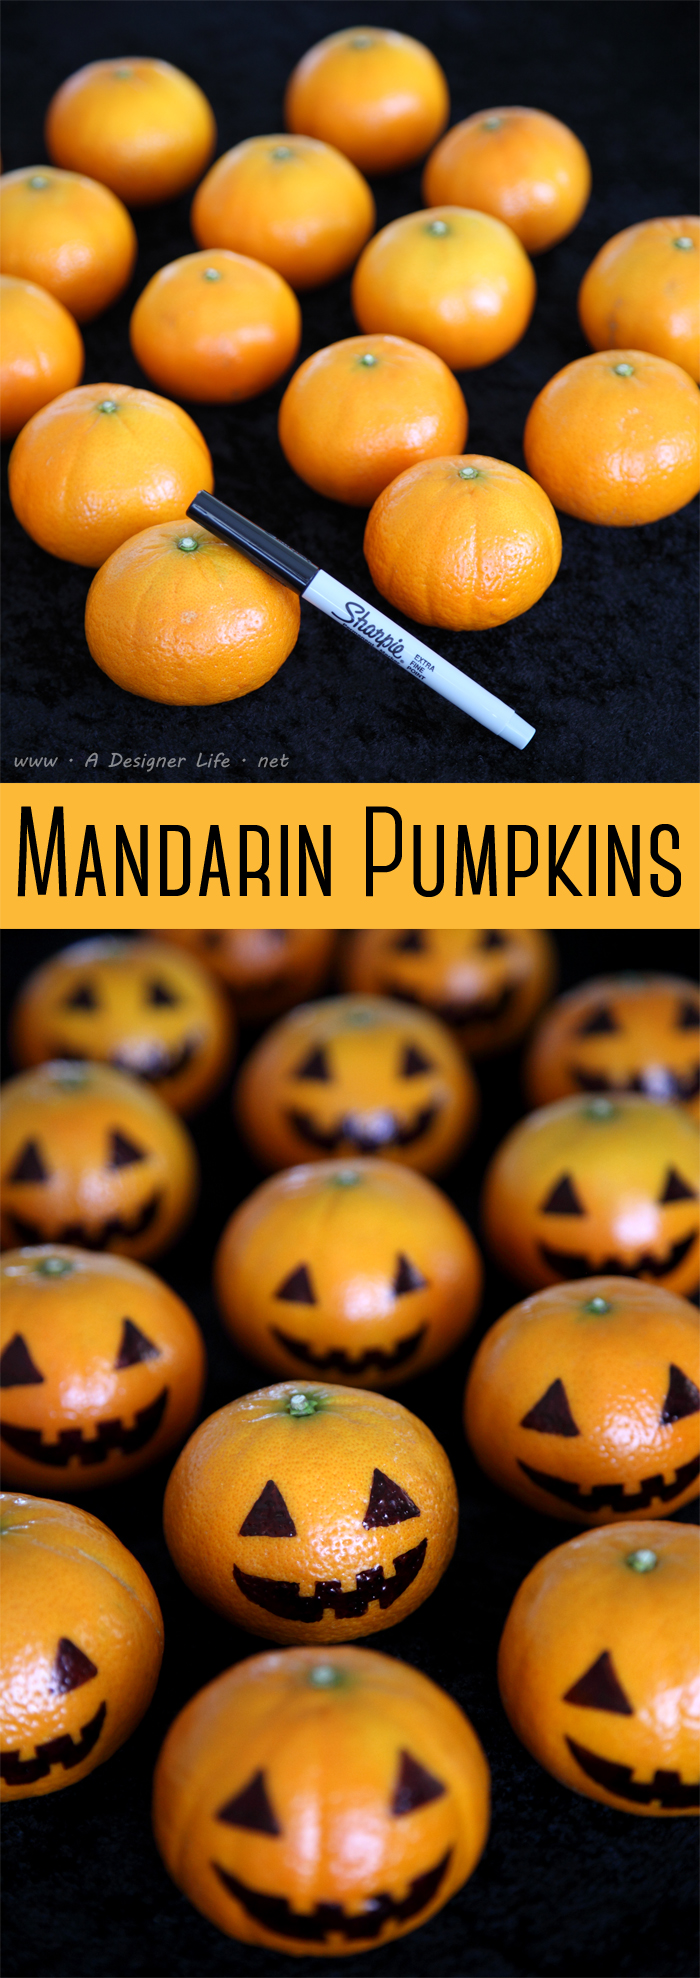 Mandarine-pumpkins-small.jpg